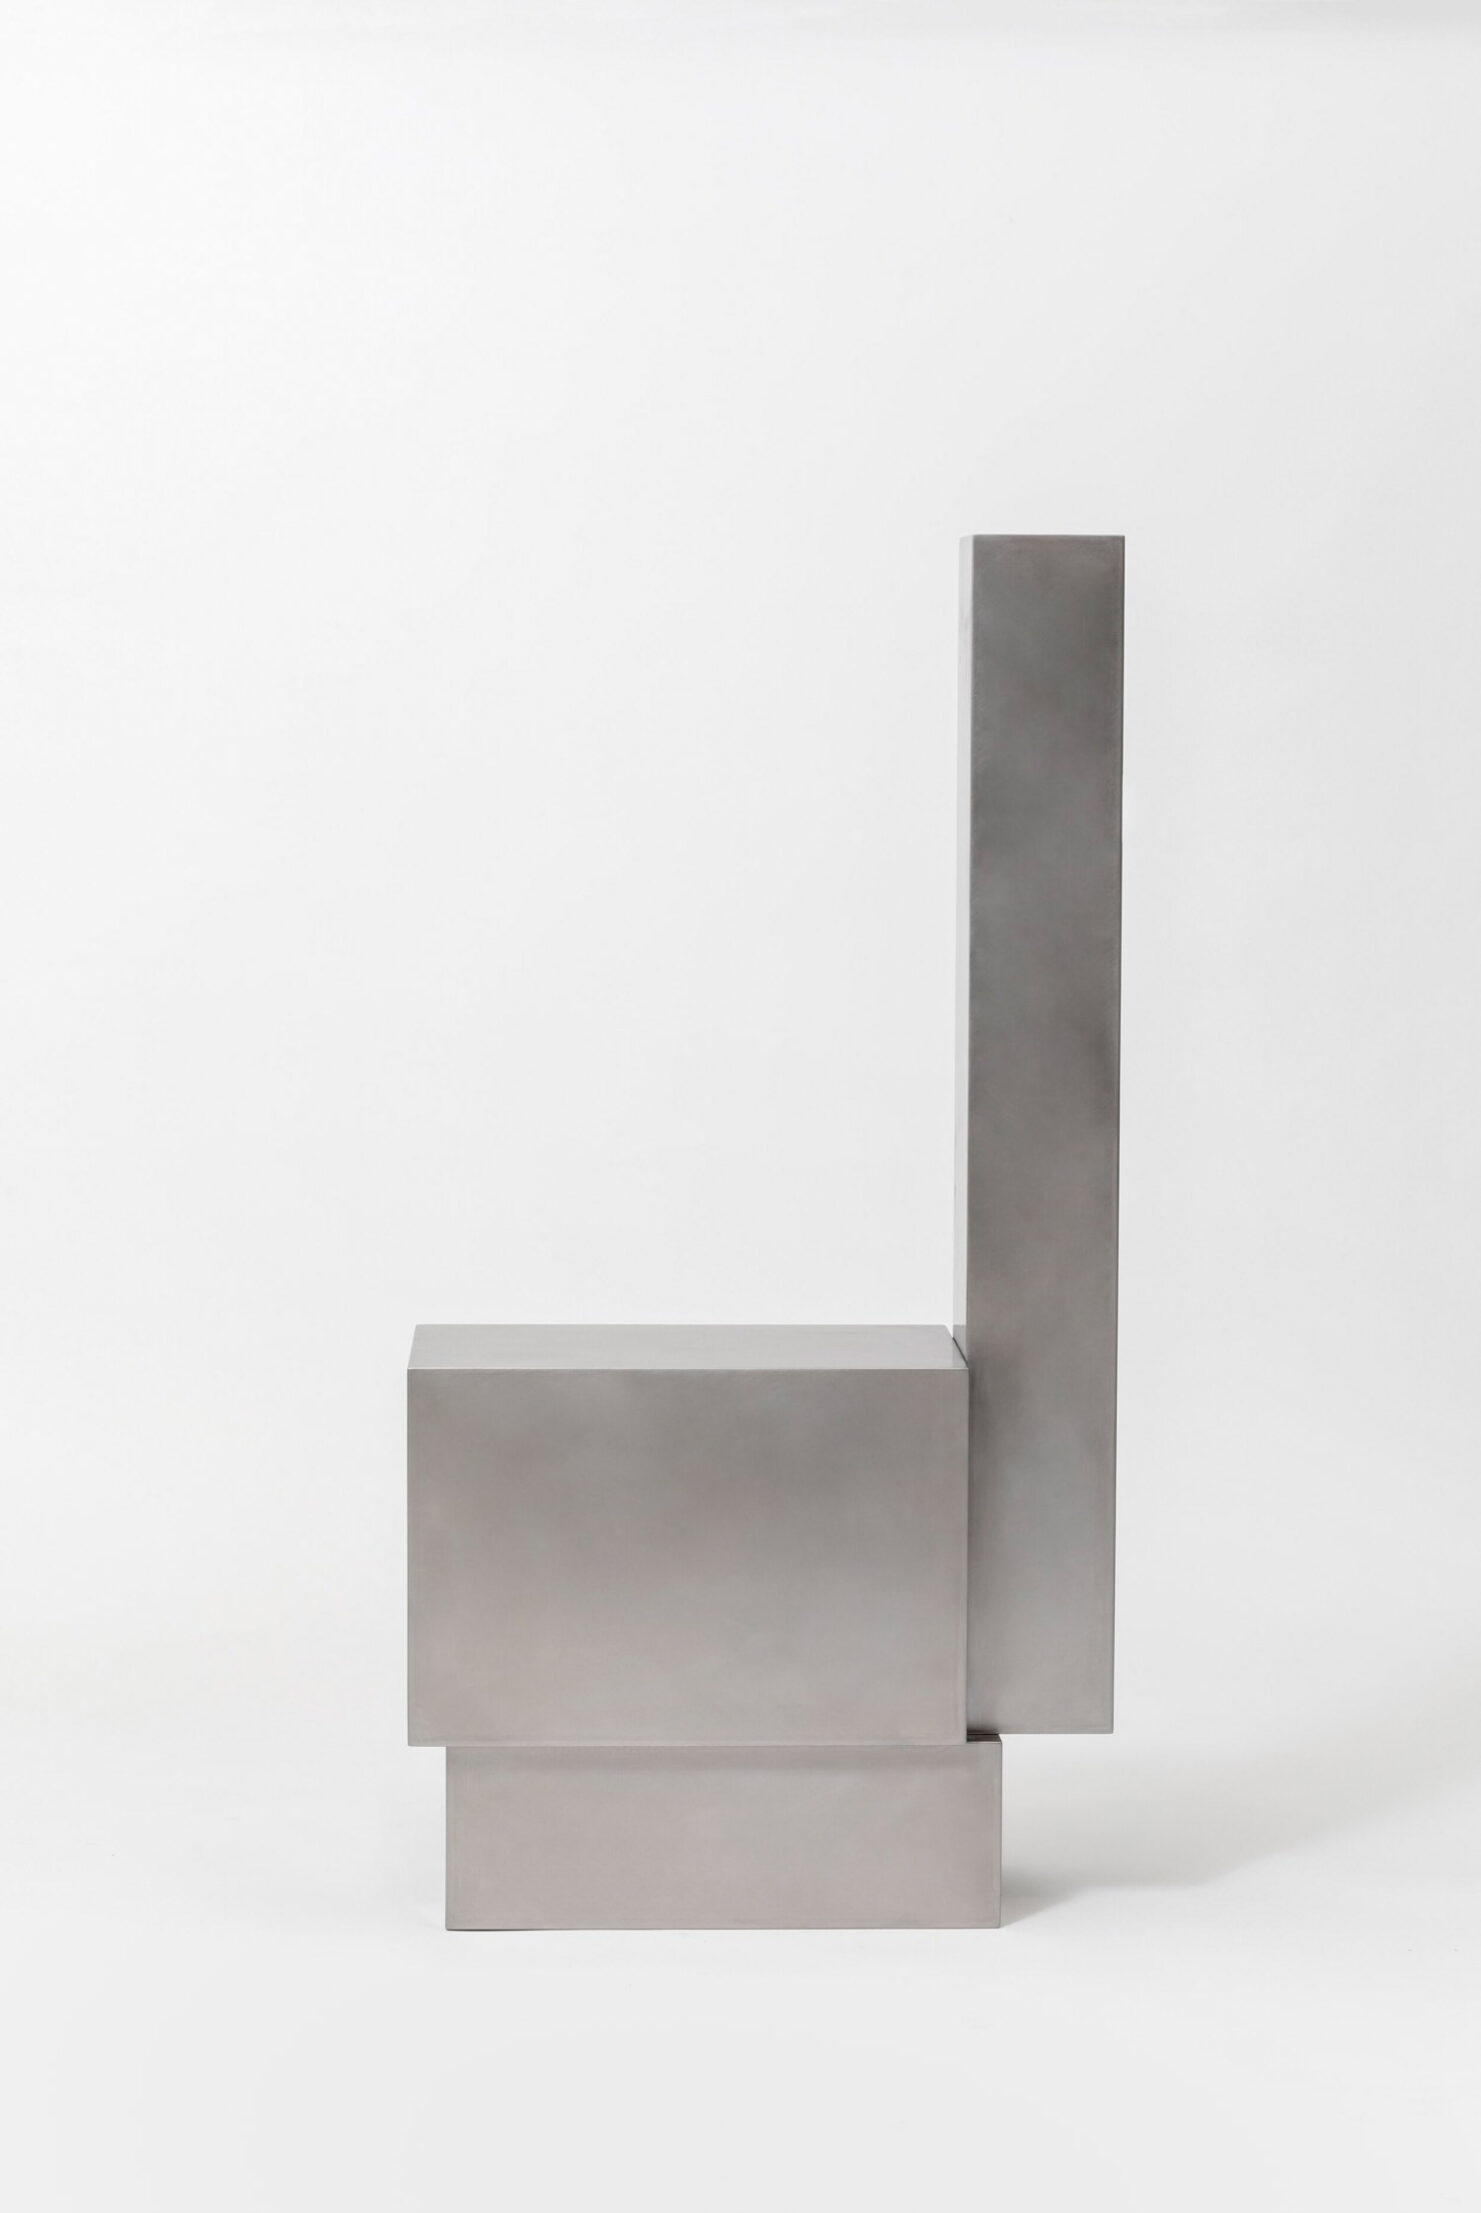 Layered Steel by Hyungshin Hwang | Aesence®